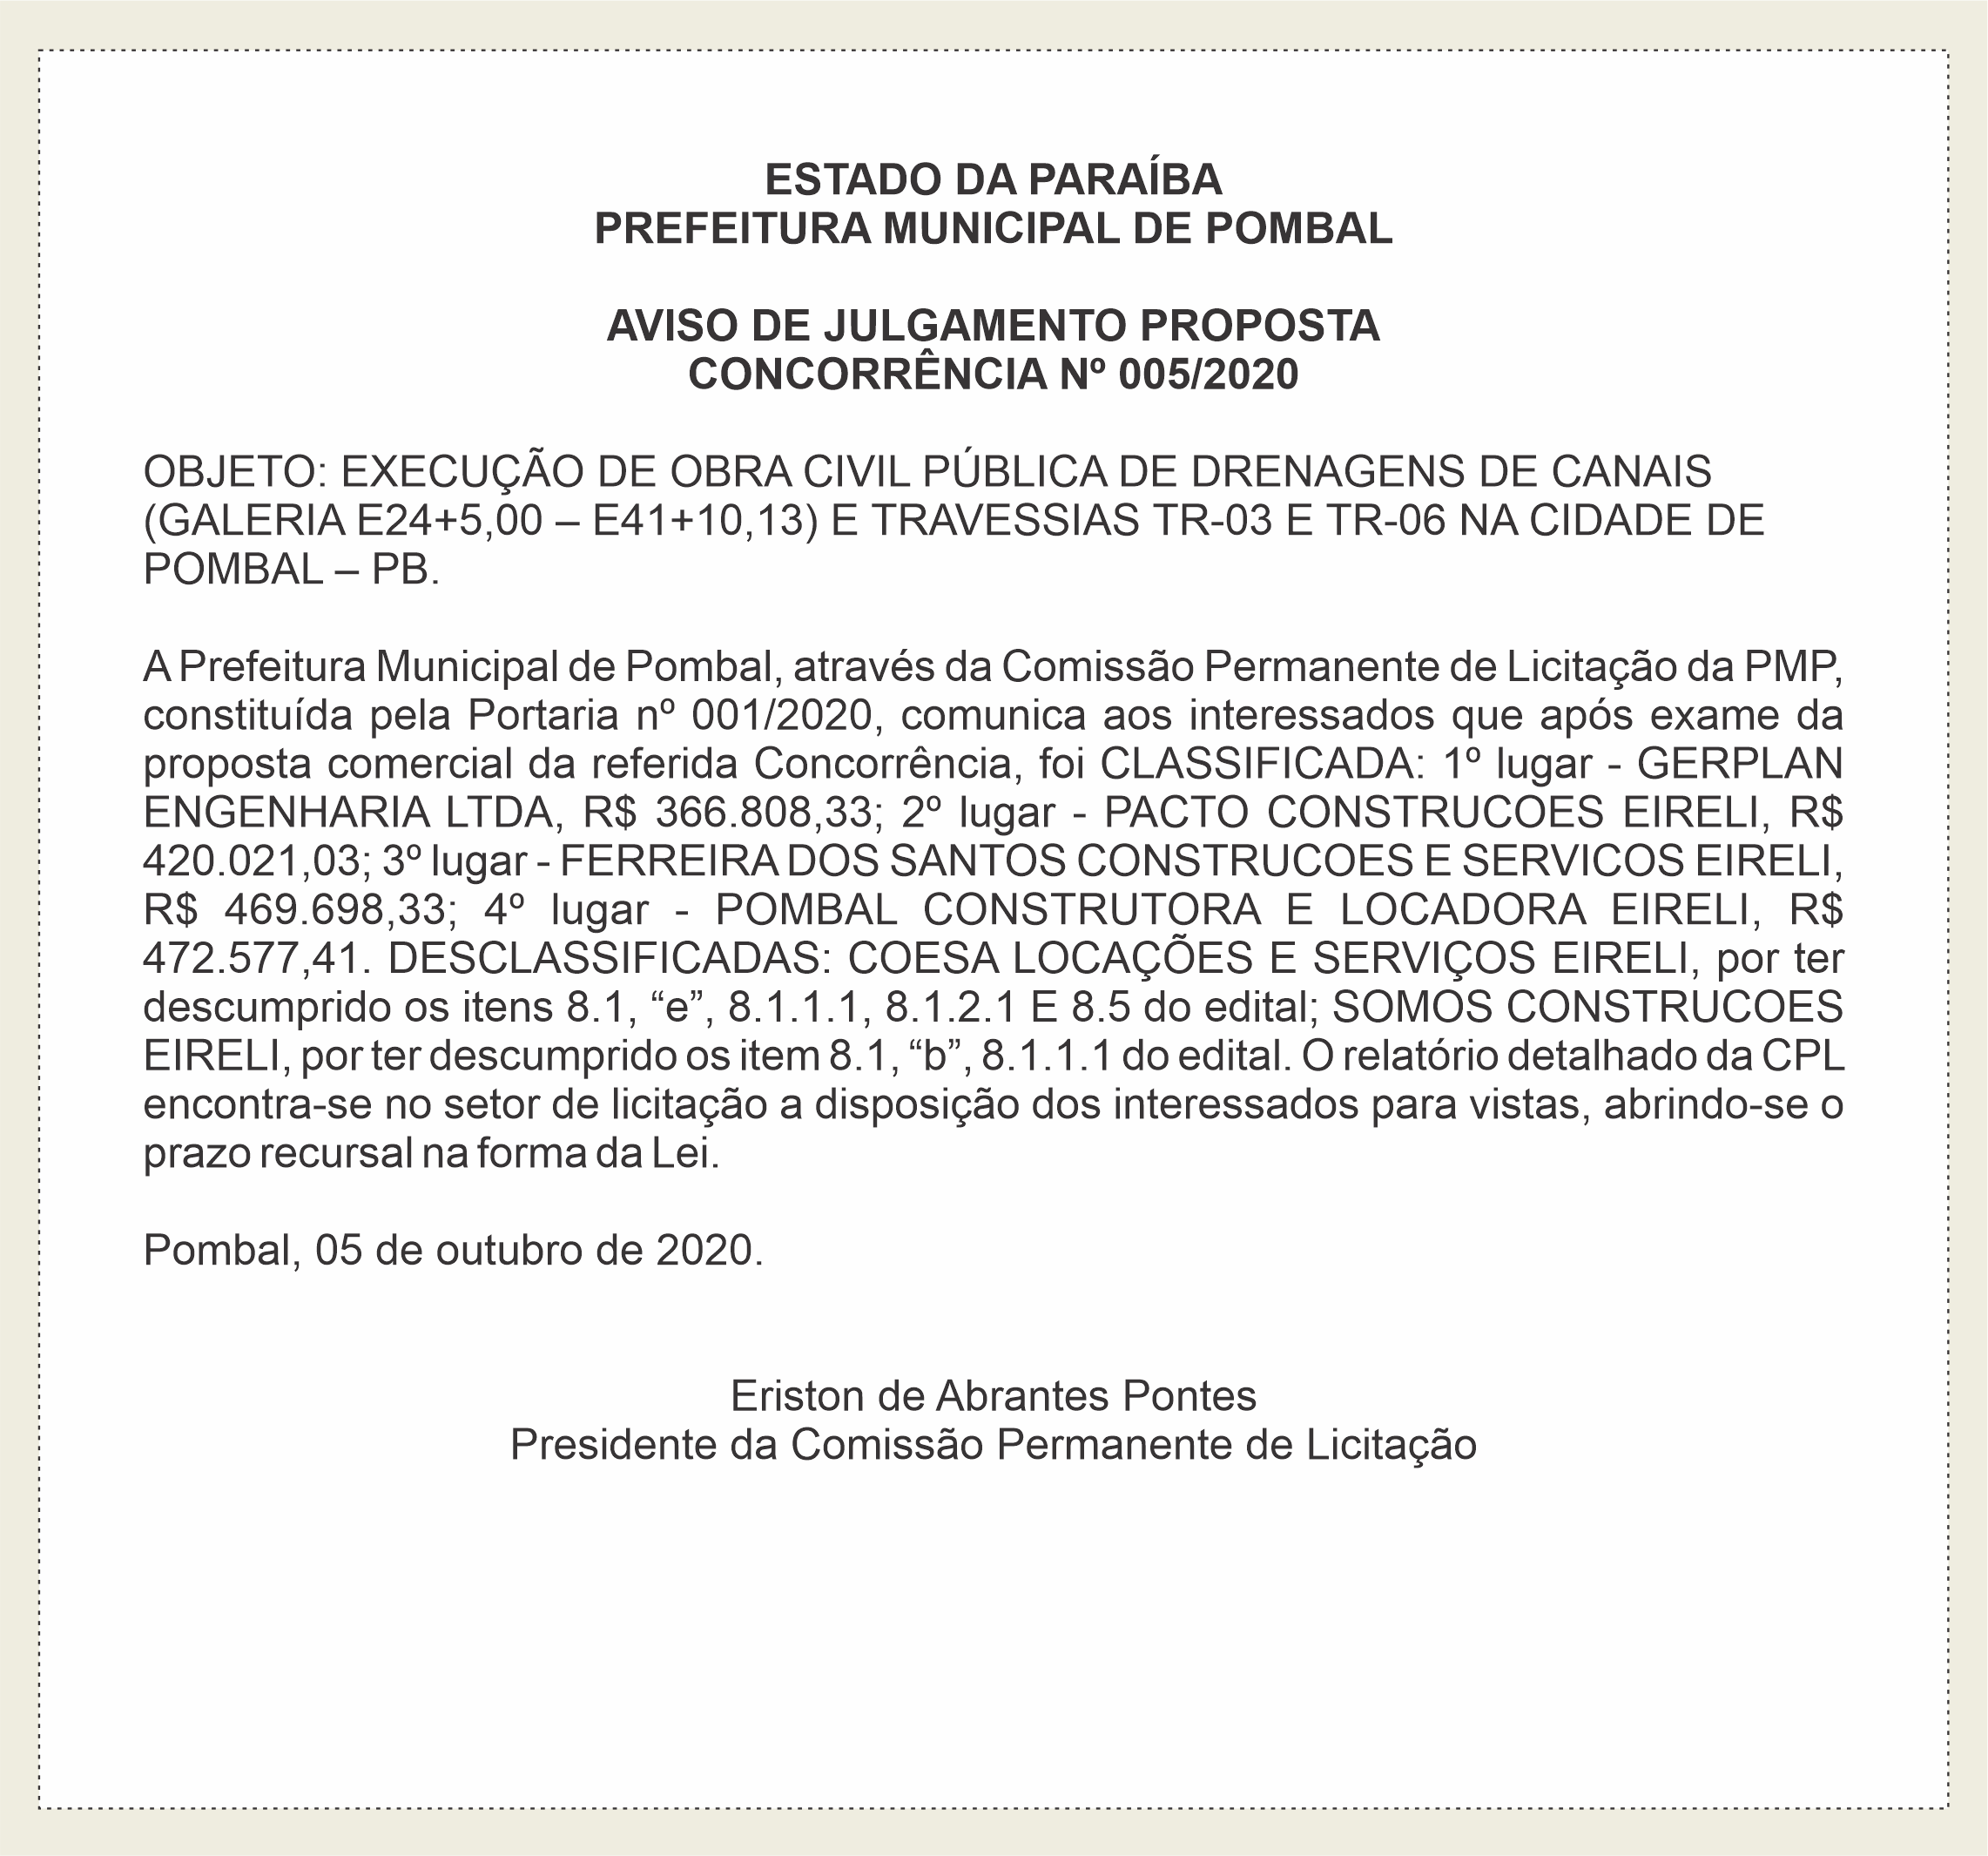 PREFEITURA MUNICIPAL DE POMBAL – AVISO DE JULGAMENTO – PROPOSTA – CONCORRÊNCIA Nº 005/2020